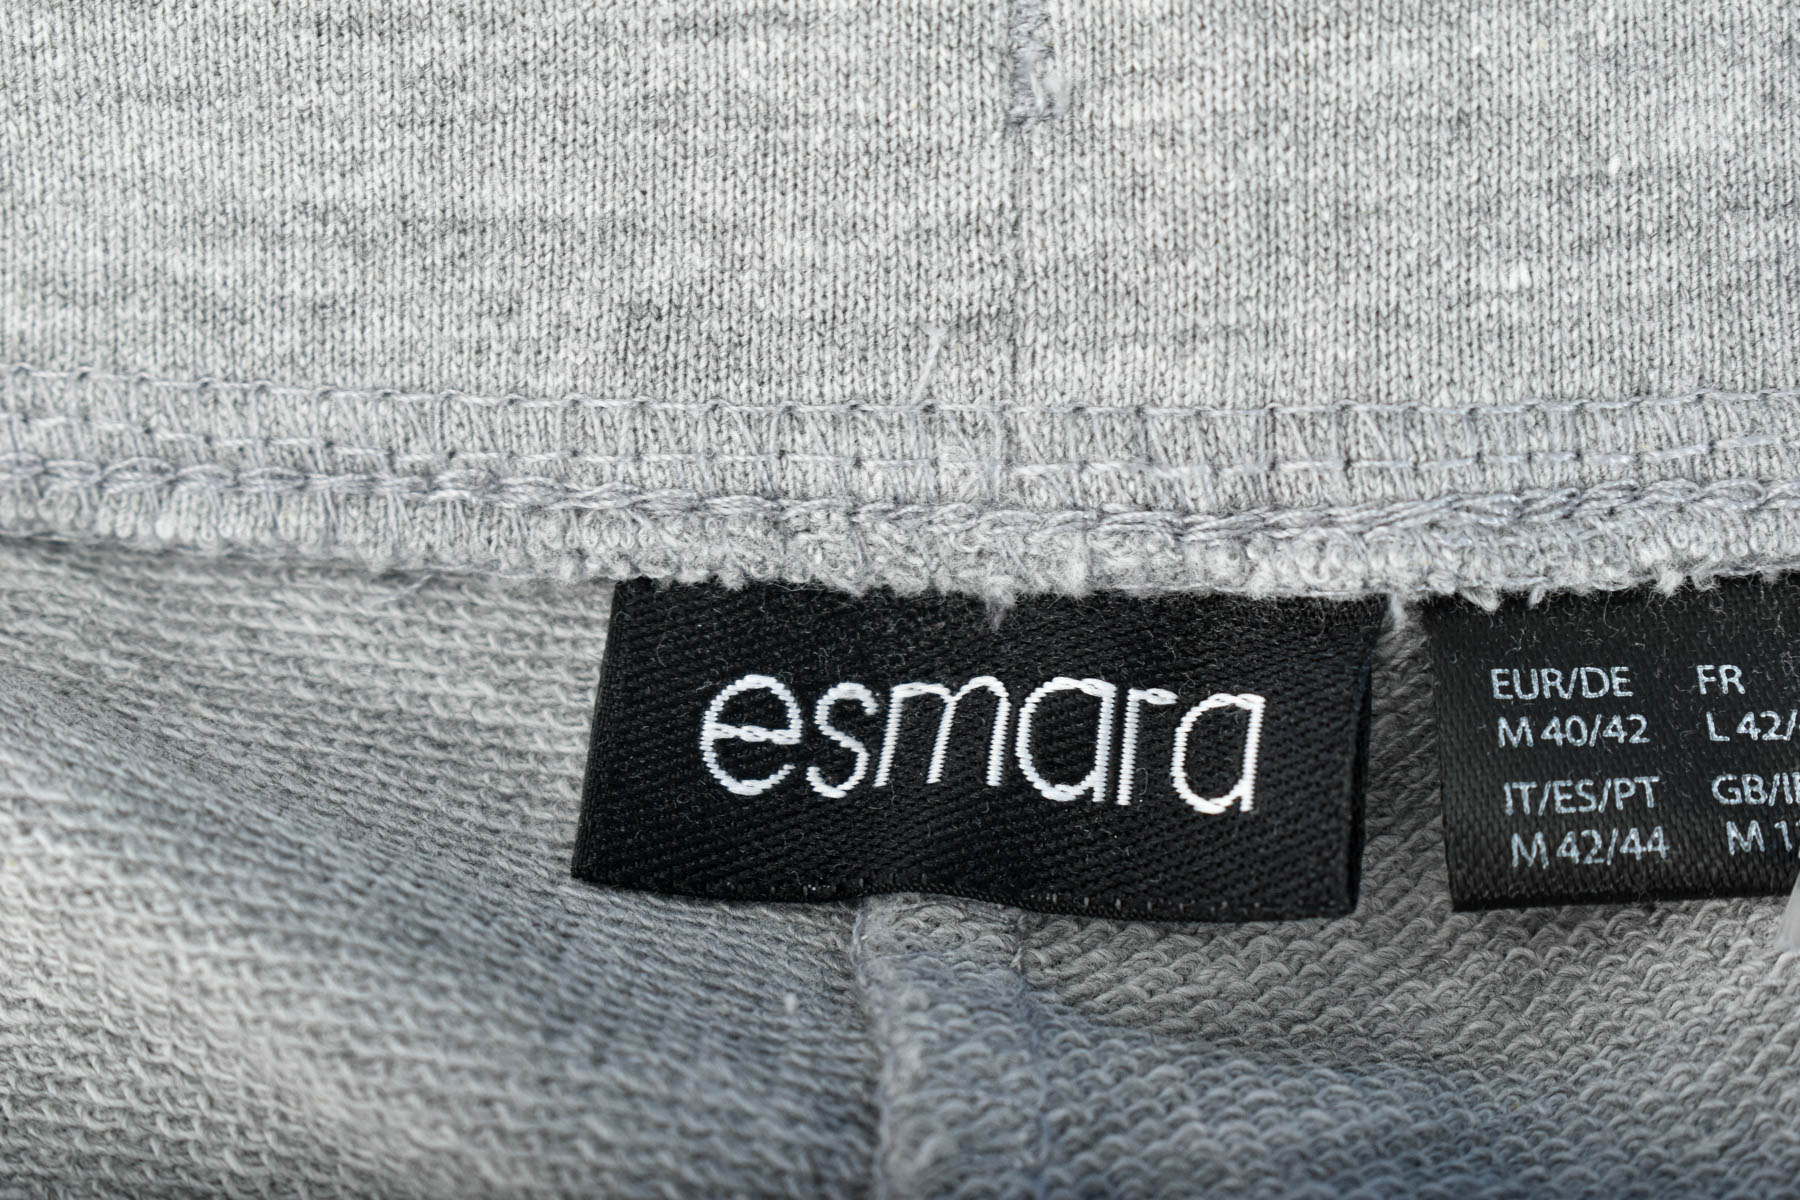 Female shorts - Esmara - 2